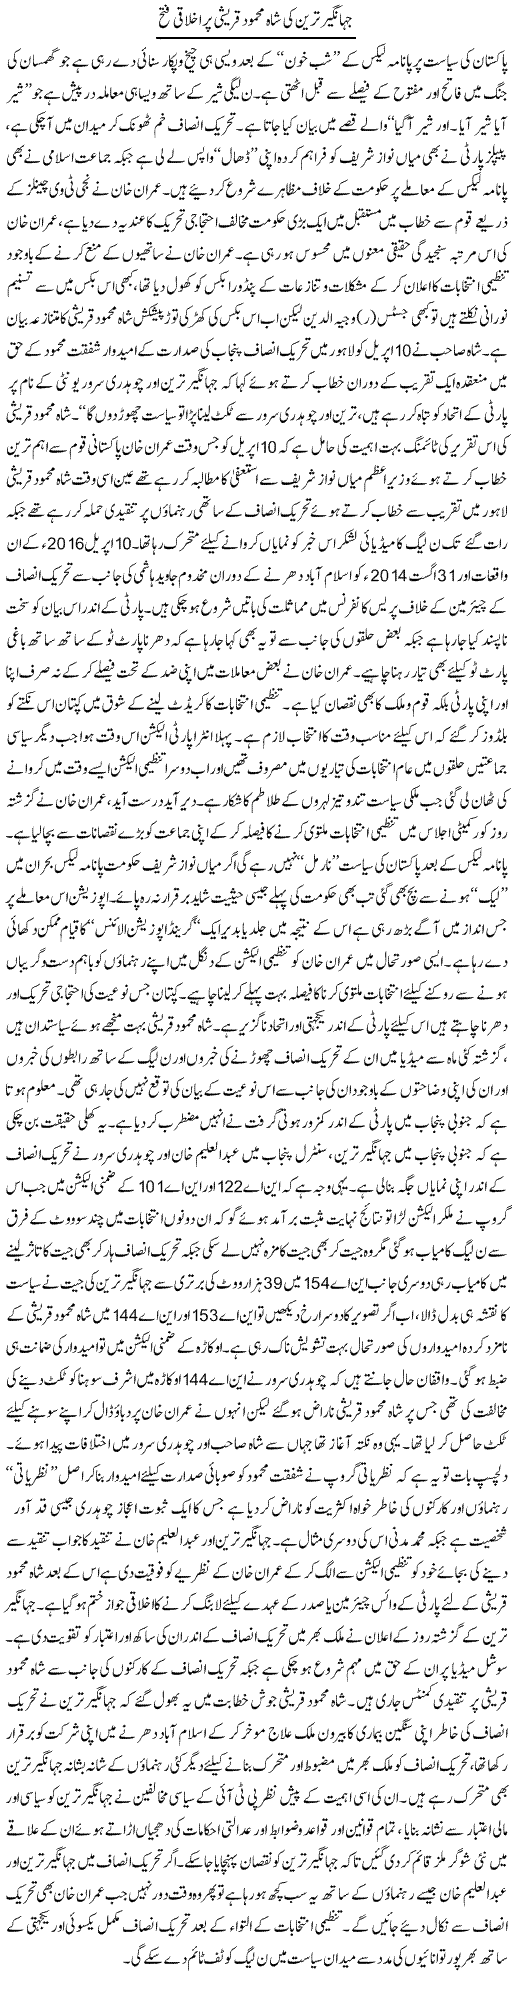 Jehangir Tareen ki shah mehmood qureshi per ikhlaqi fatah | Rizwan Asif | Daily Urdu Columns